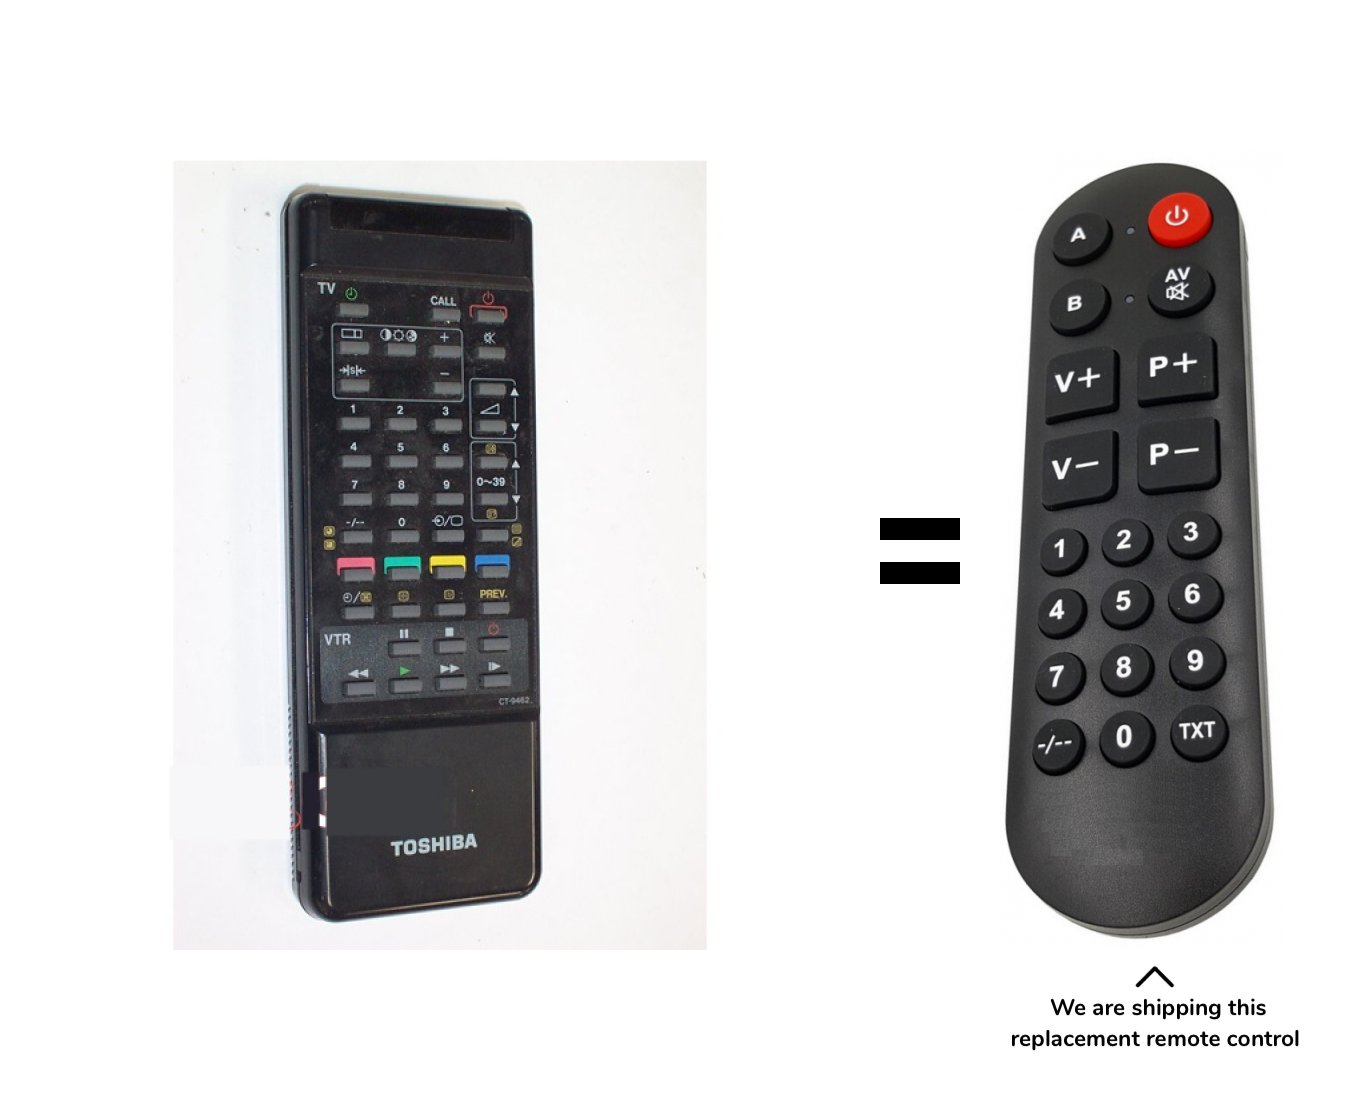 Toshiba CT-9507 remote control for seniors